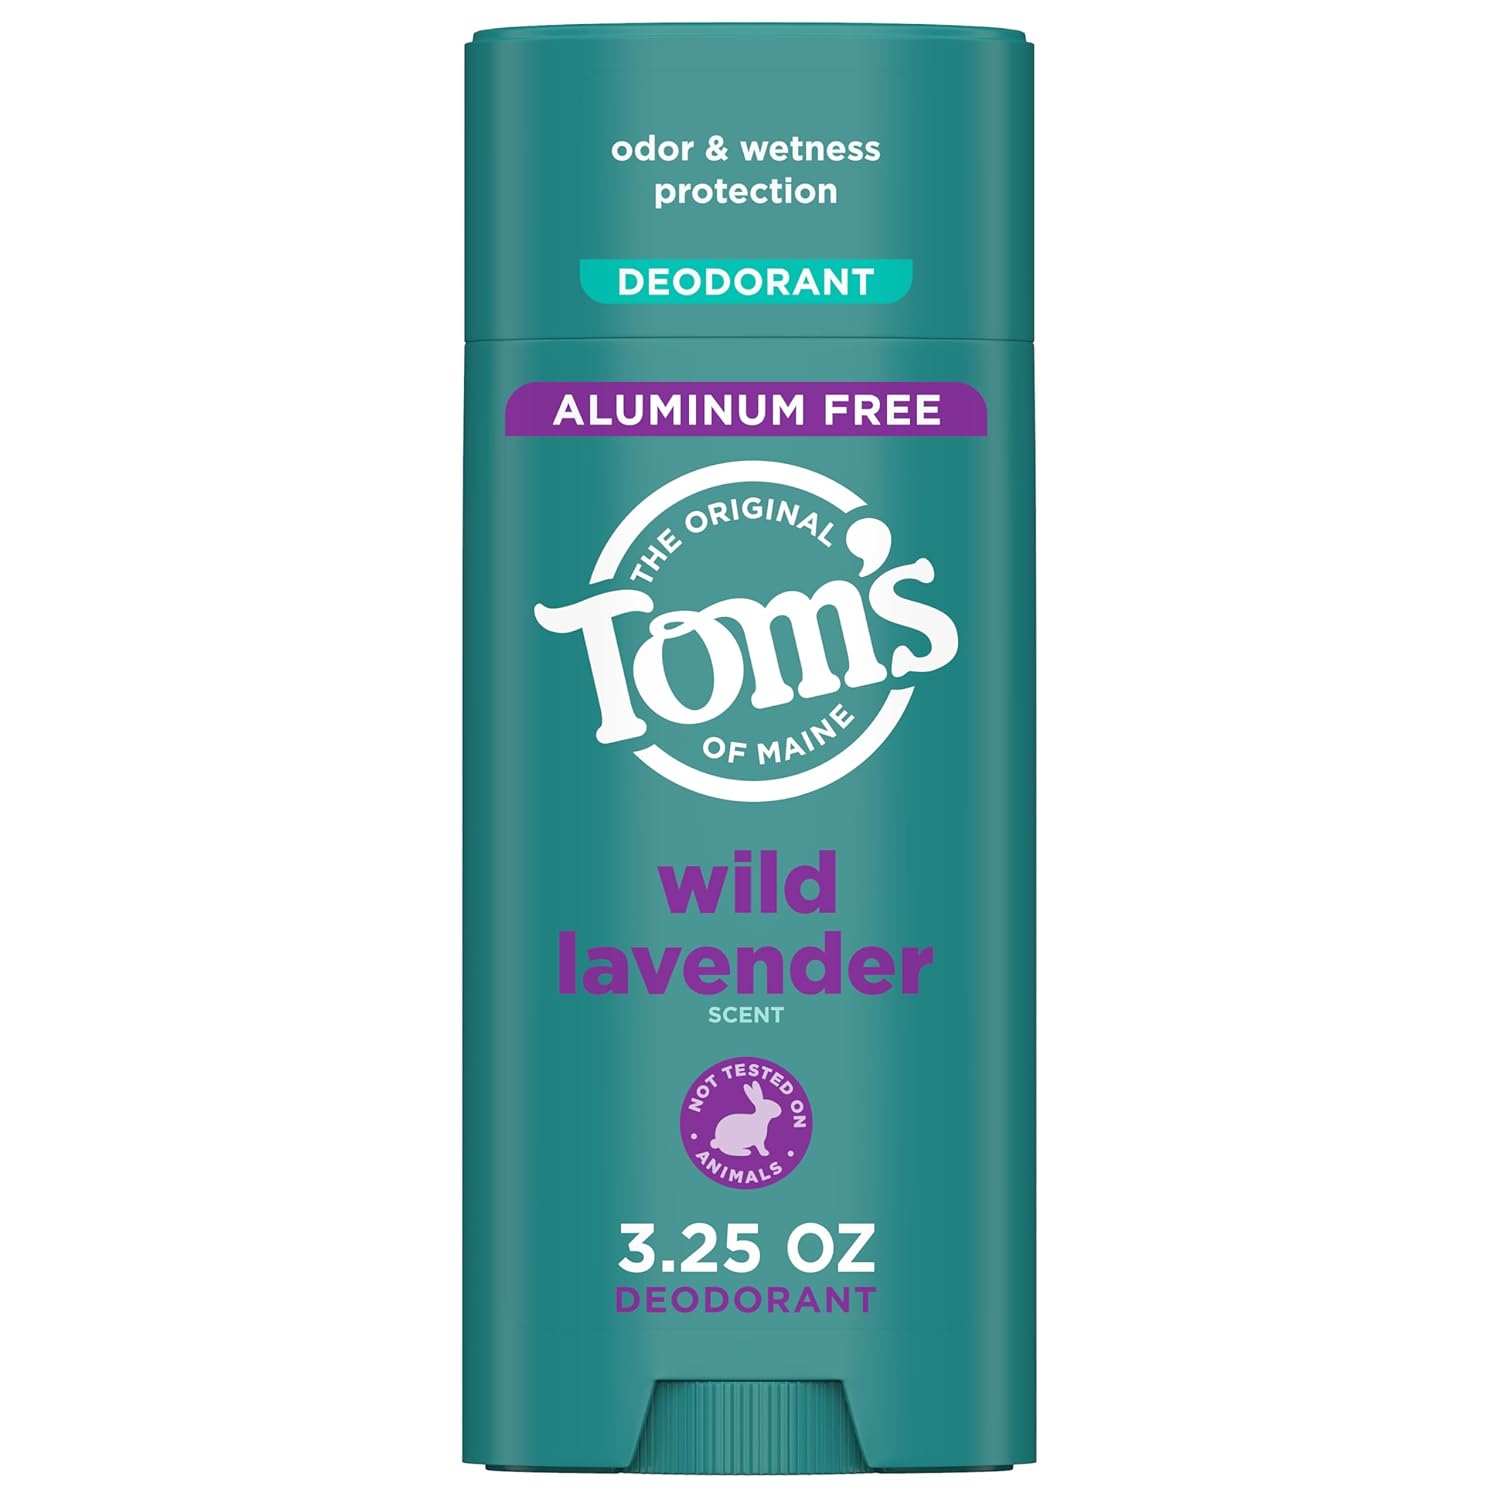 Tom’s of Maine Wild Lavender Natural Deodorant for Women and Men, Aluminum Free, 3.25 oz